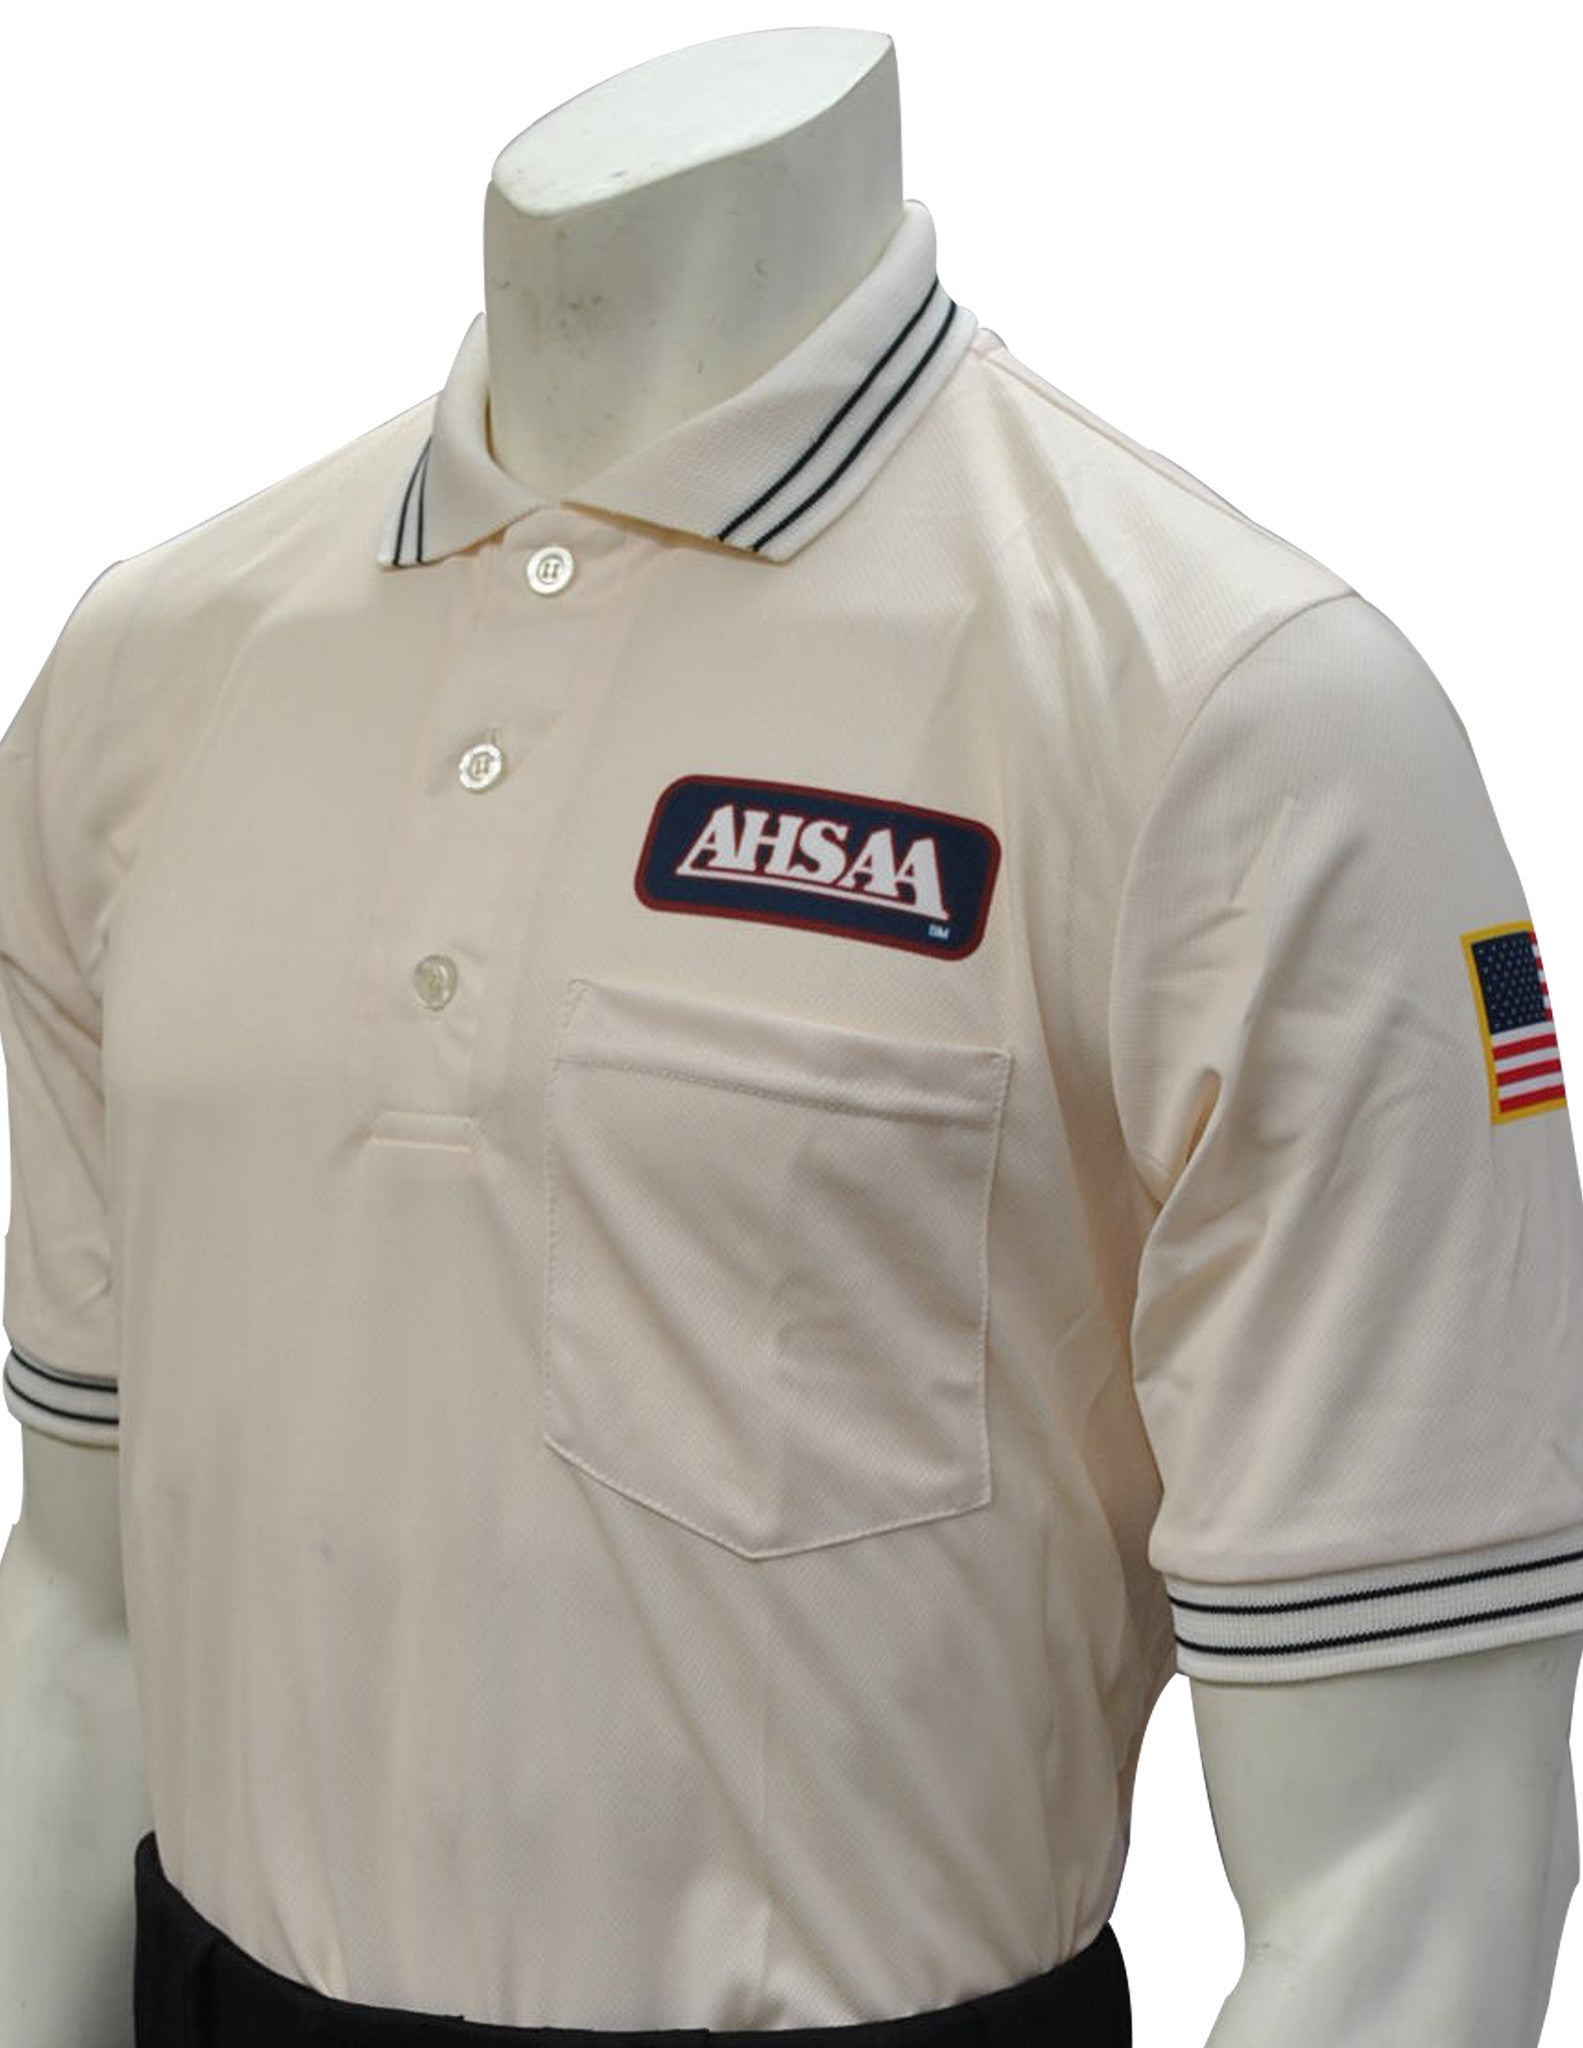 USA312 - NEW Smitty Major League Style Umpire Shirt - Available